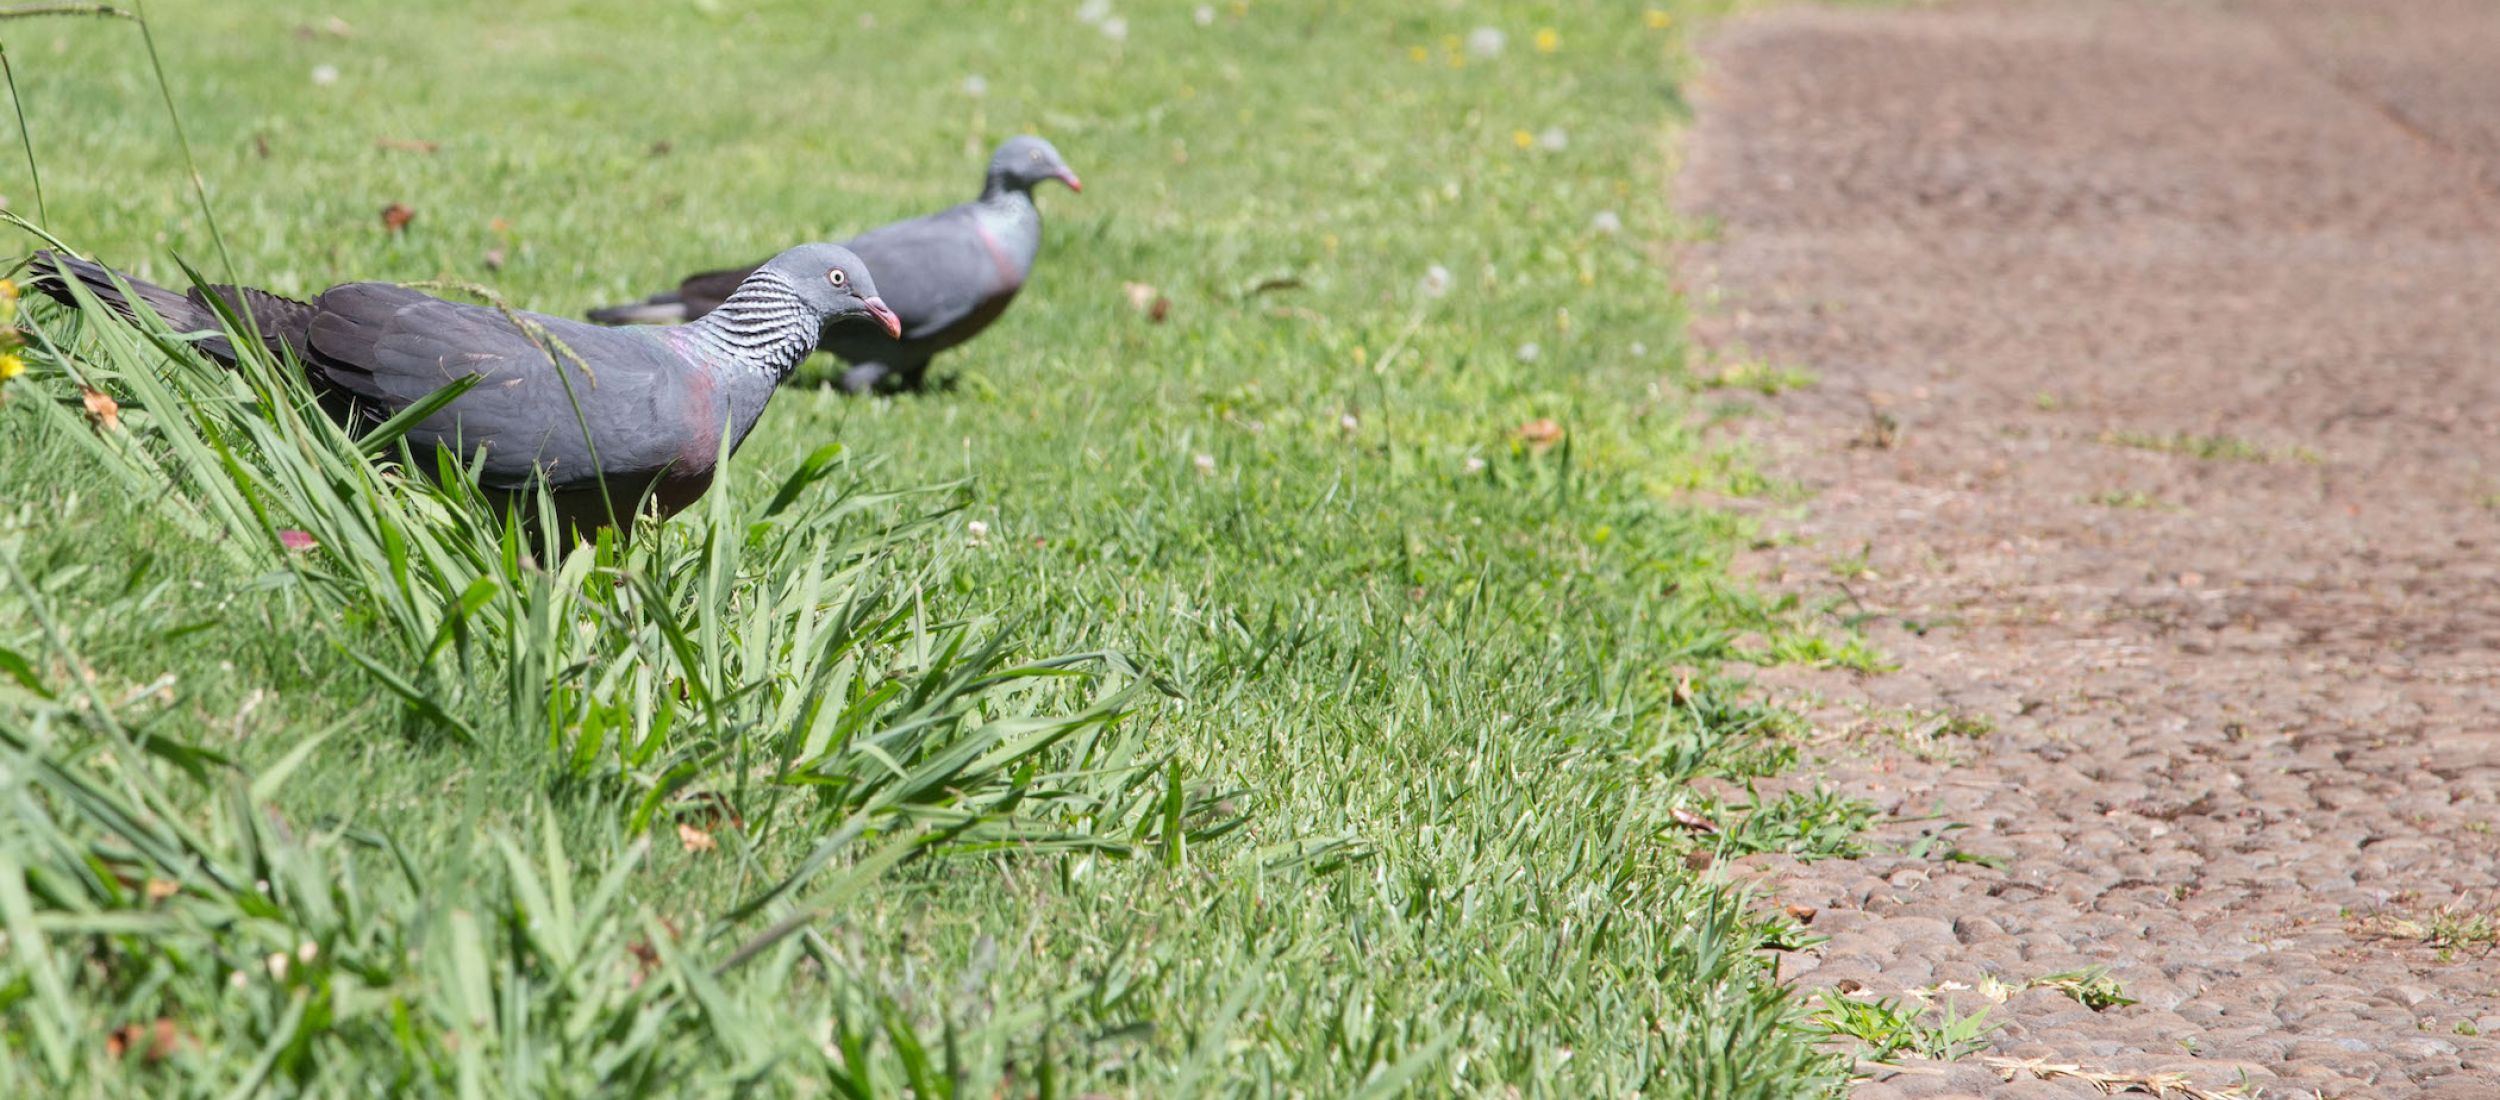 The Rare Endemic Trocaz Pigeon